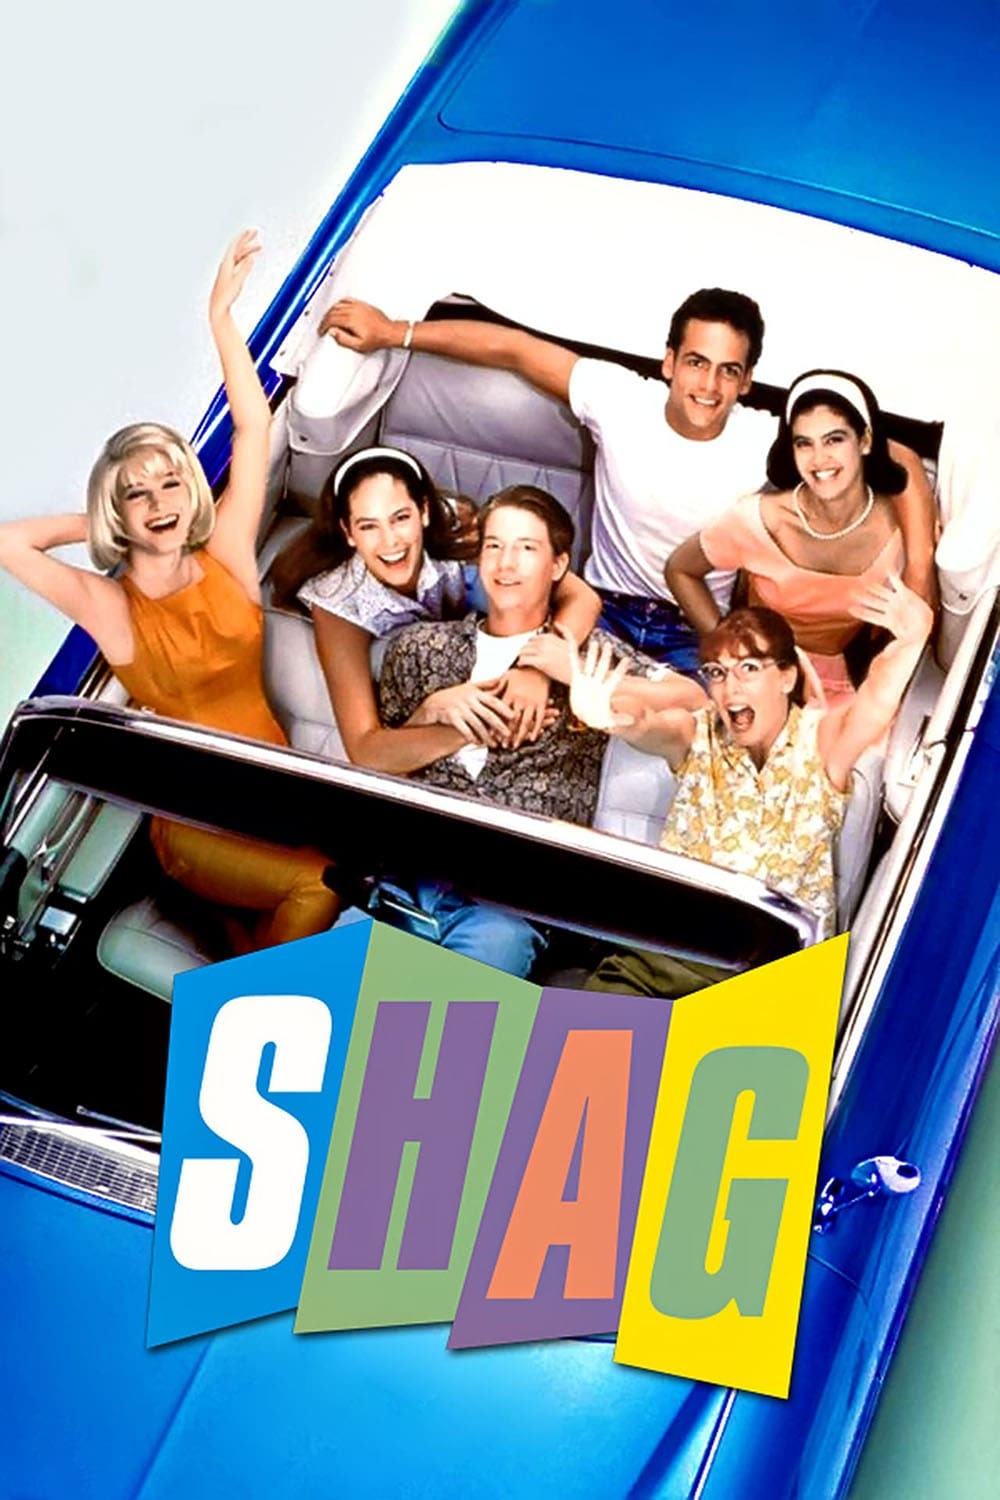 Shag (1989)